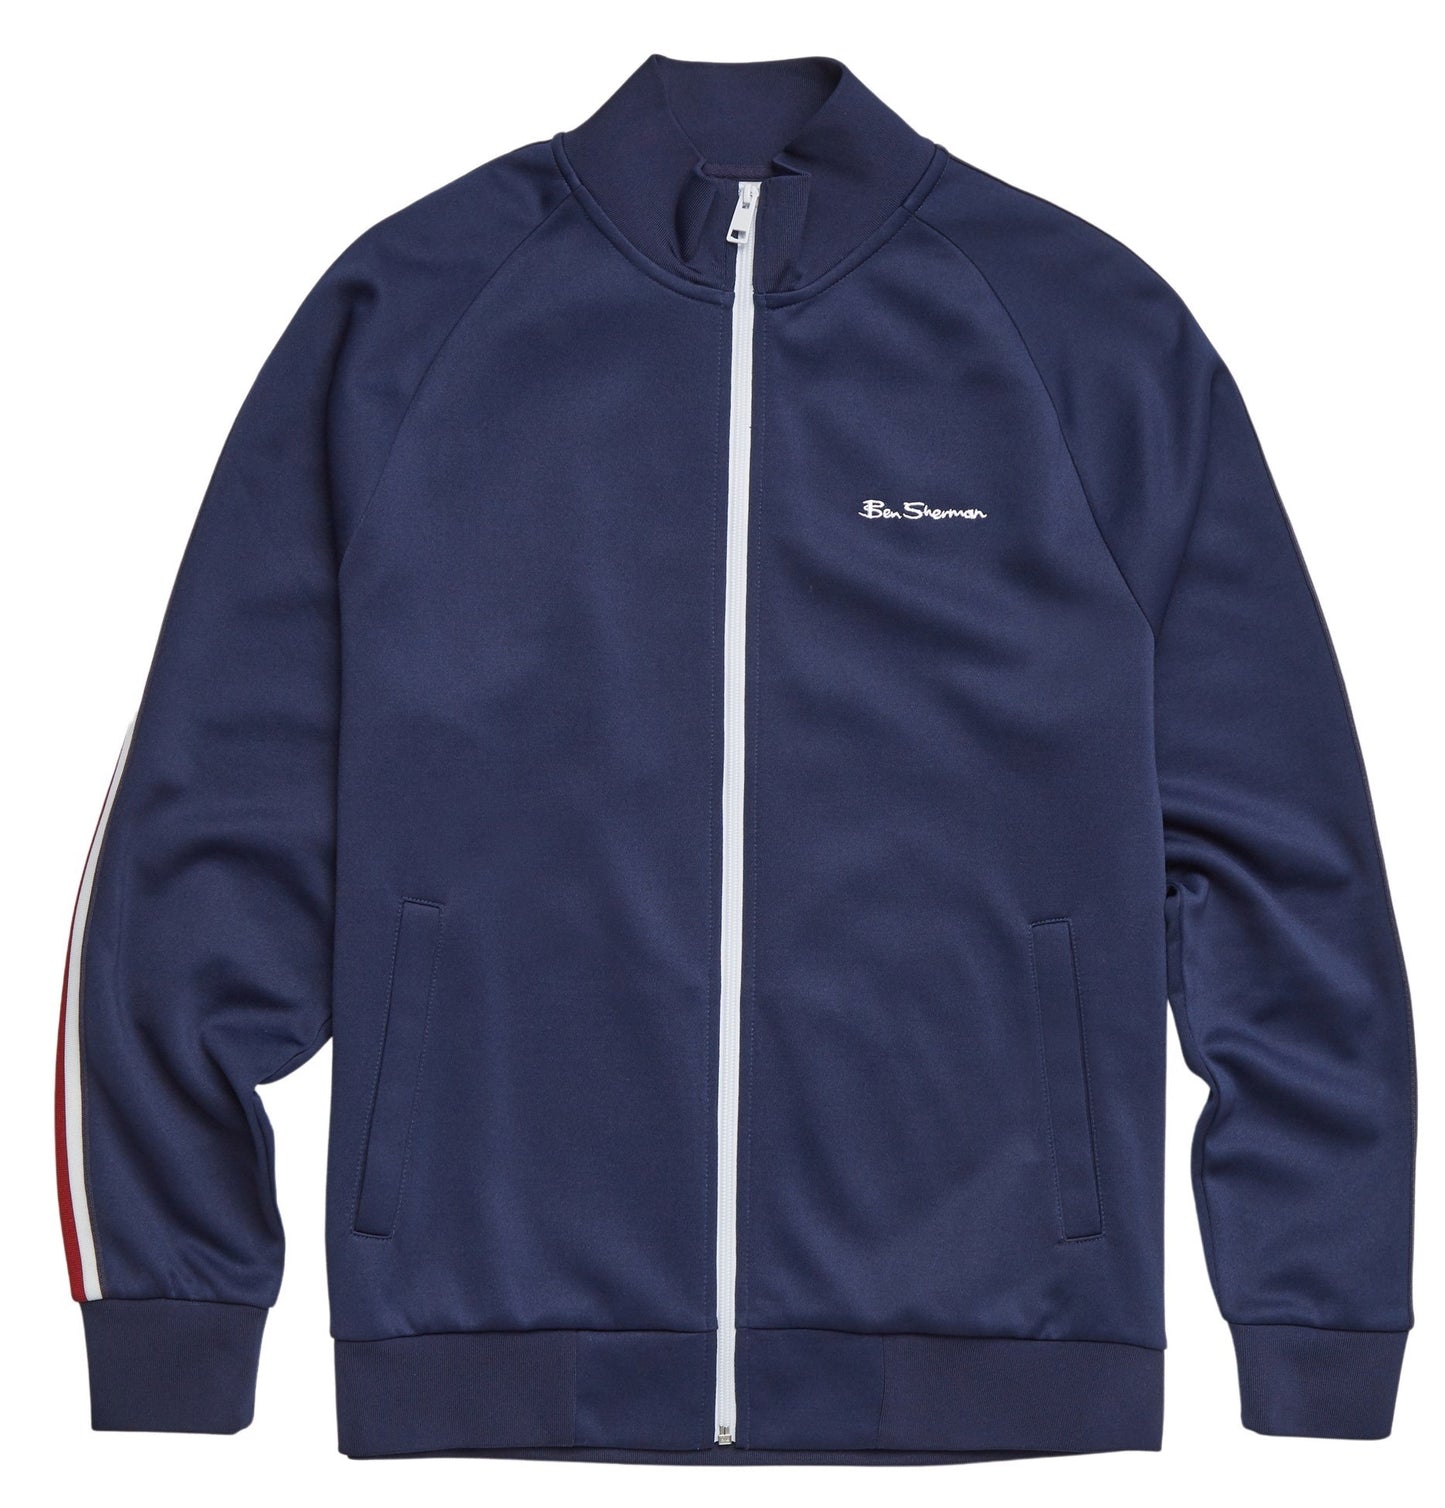 Ben Sherman Navy Blue Striped Retro Track Top Jacket